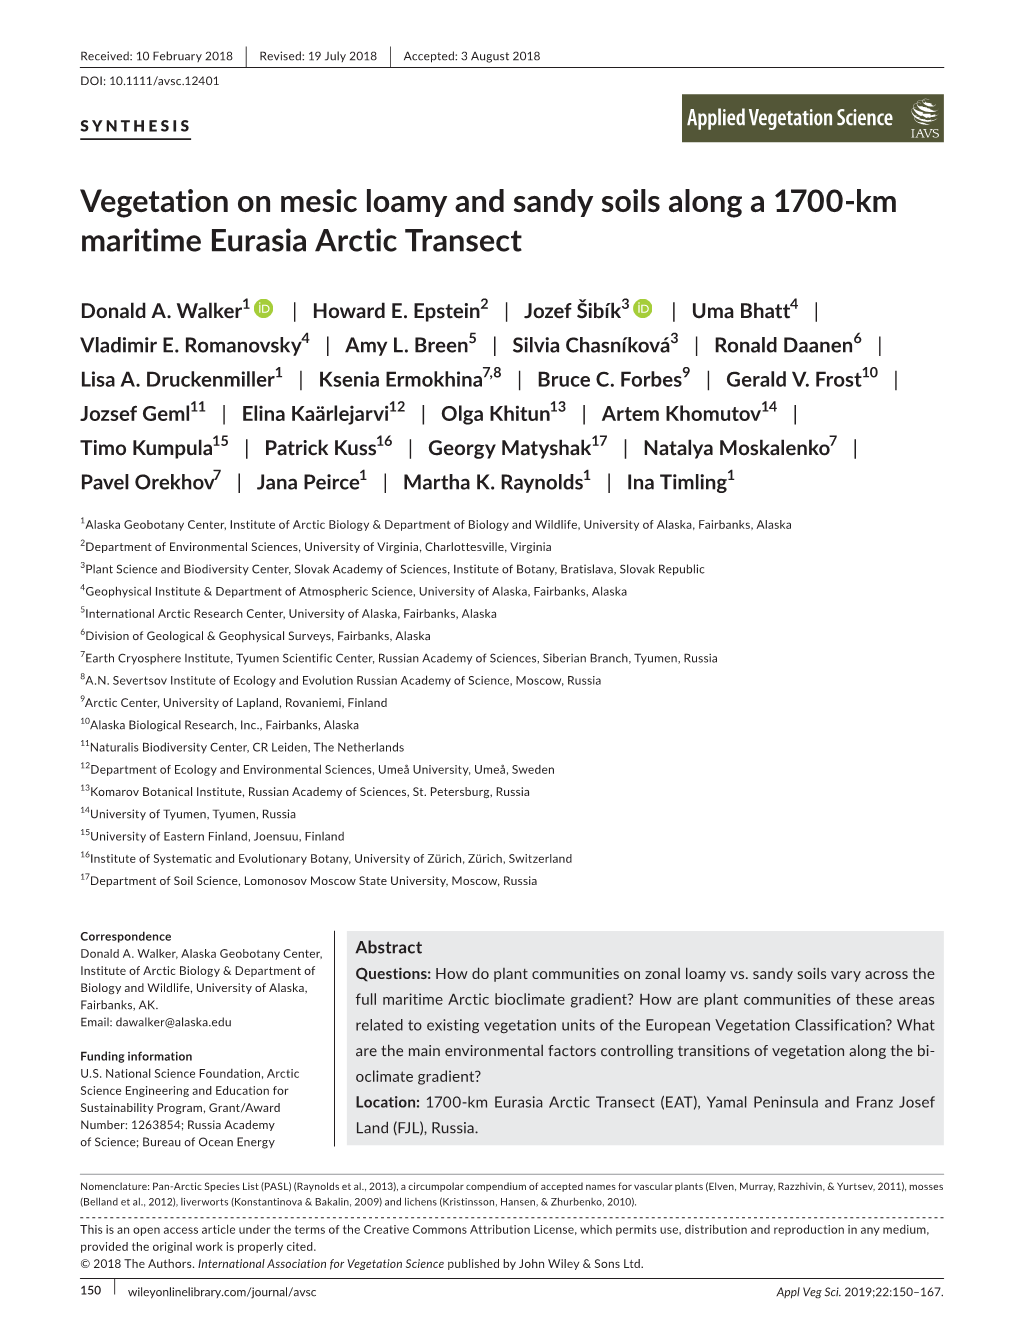 Vegetation on Mesic Loamy and Sandy Soils Along a 1700-­Km Maritime Eurasia Arctic Transect